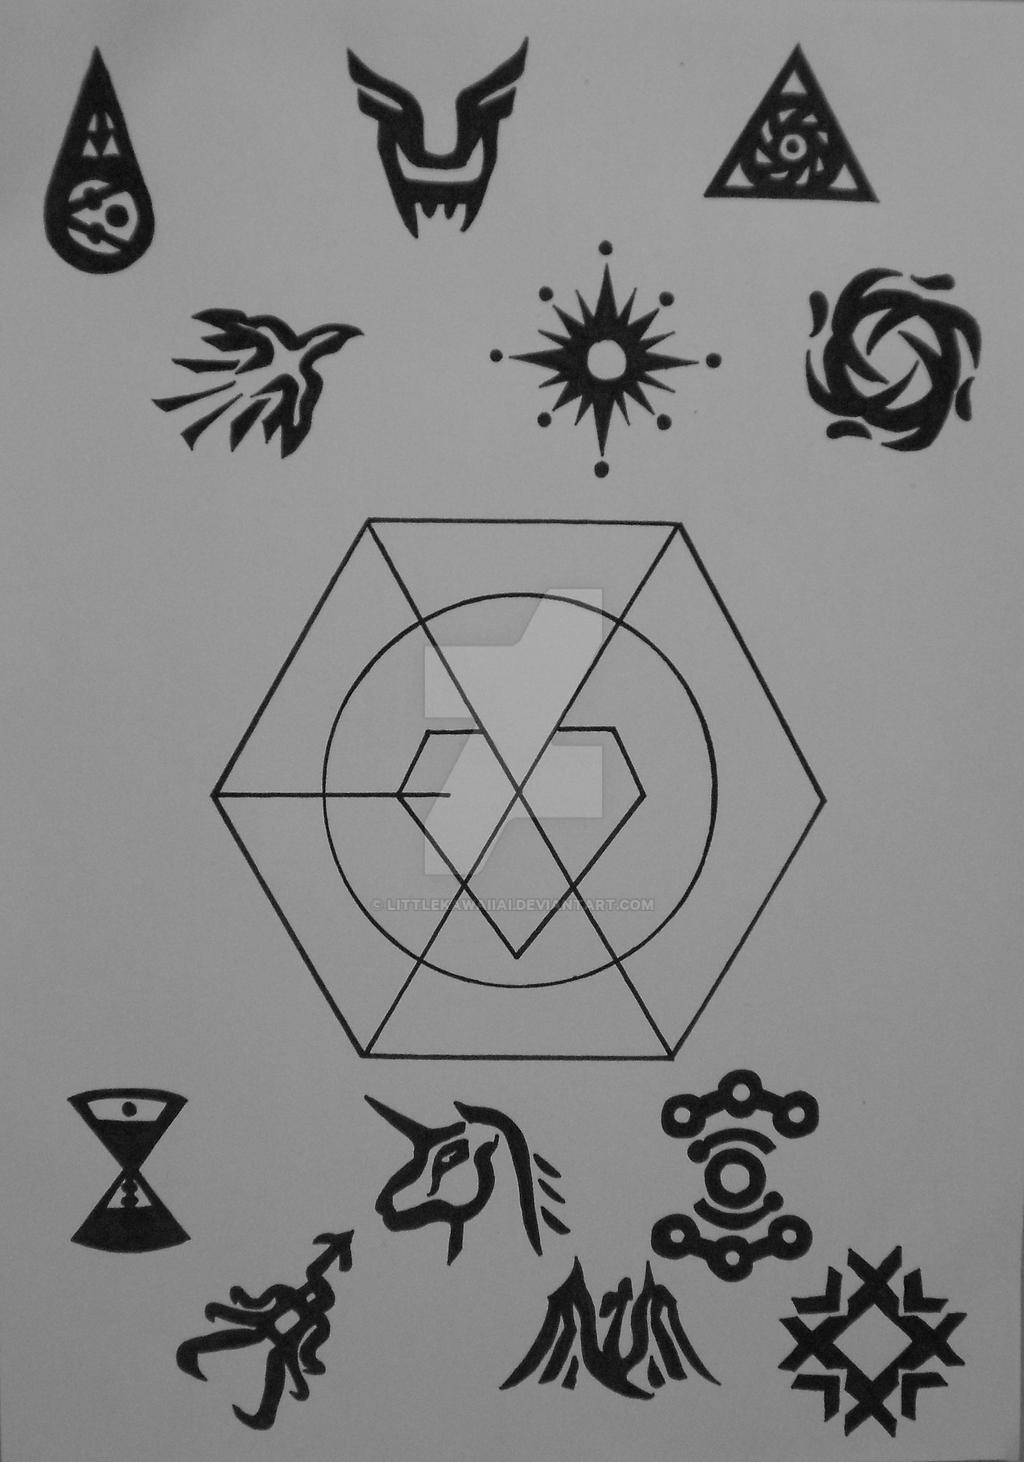 EXO members' symbols by LittleKawaiiAi on DeviantArt